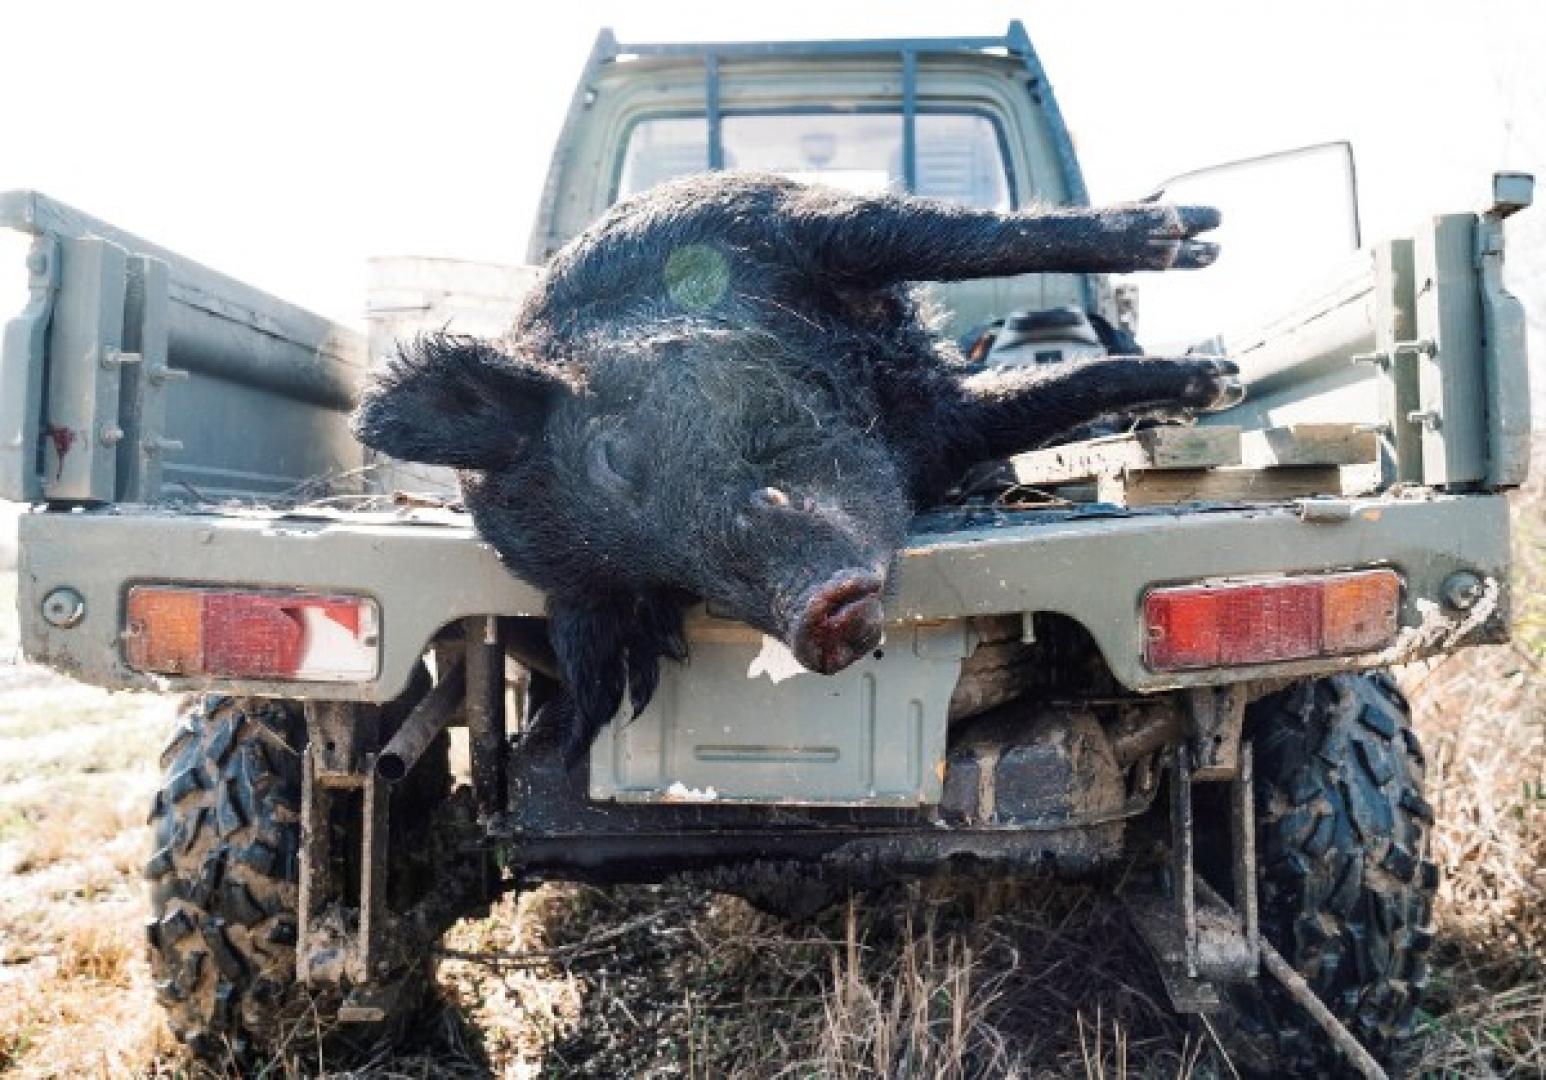 Hog in back of truck hog hunting